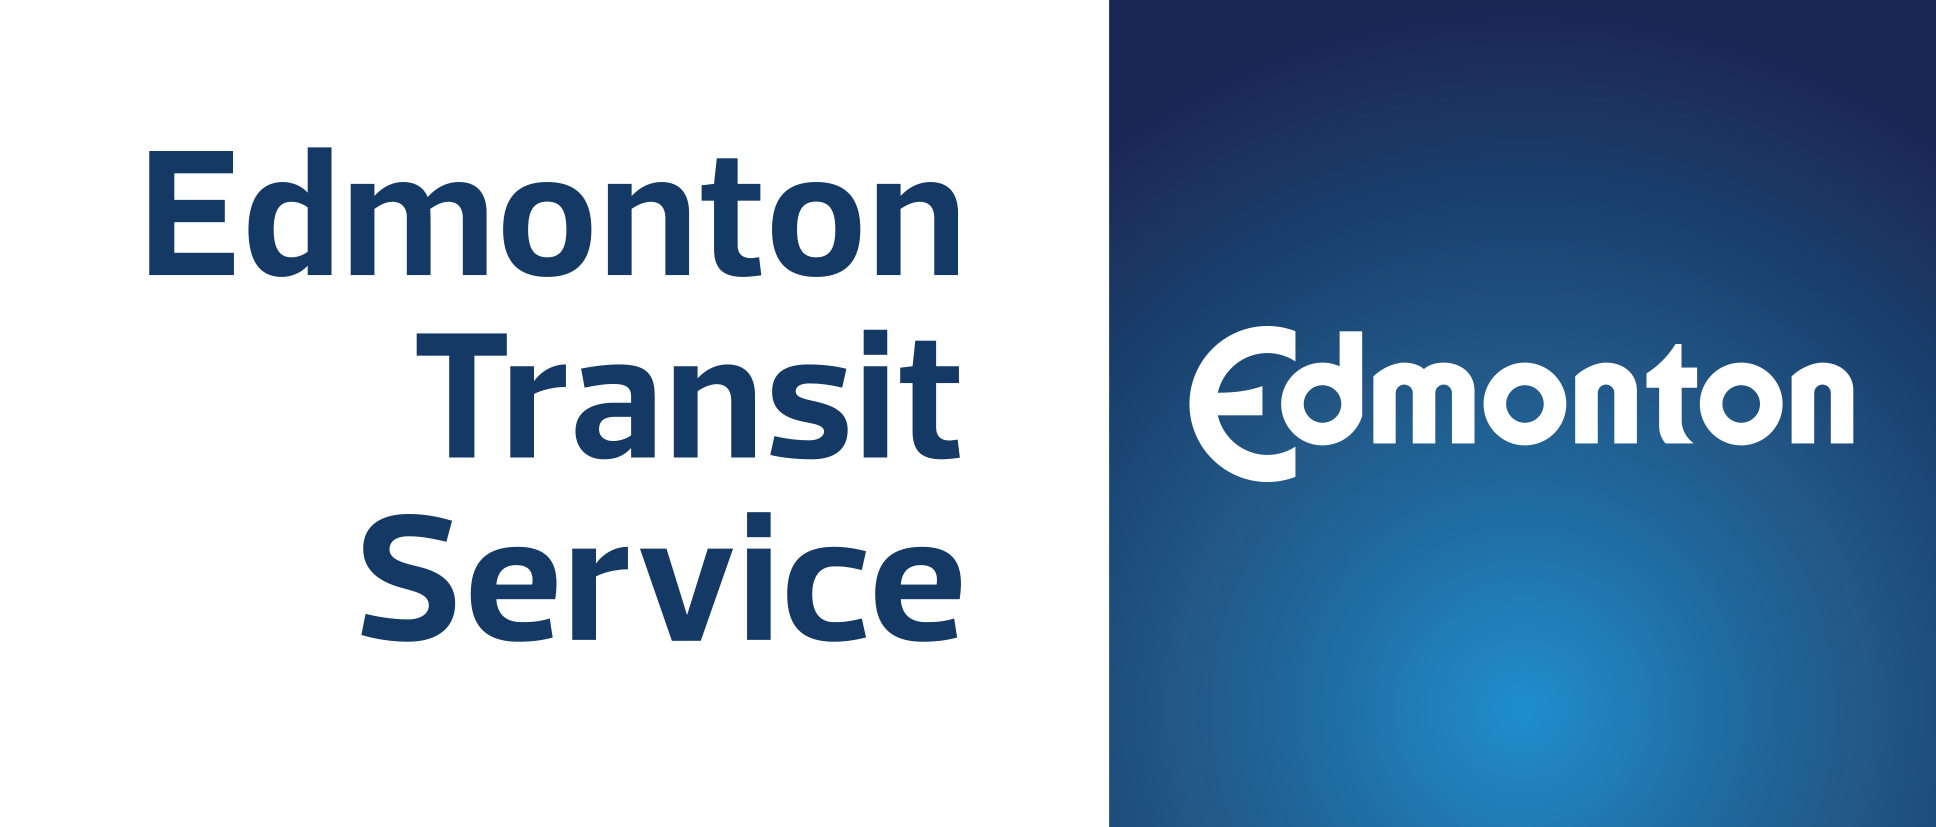 City of Edmonton - Edmonton Transit Service